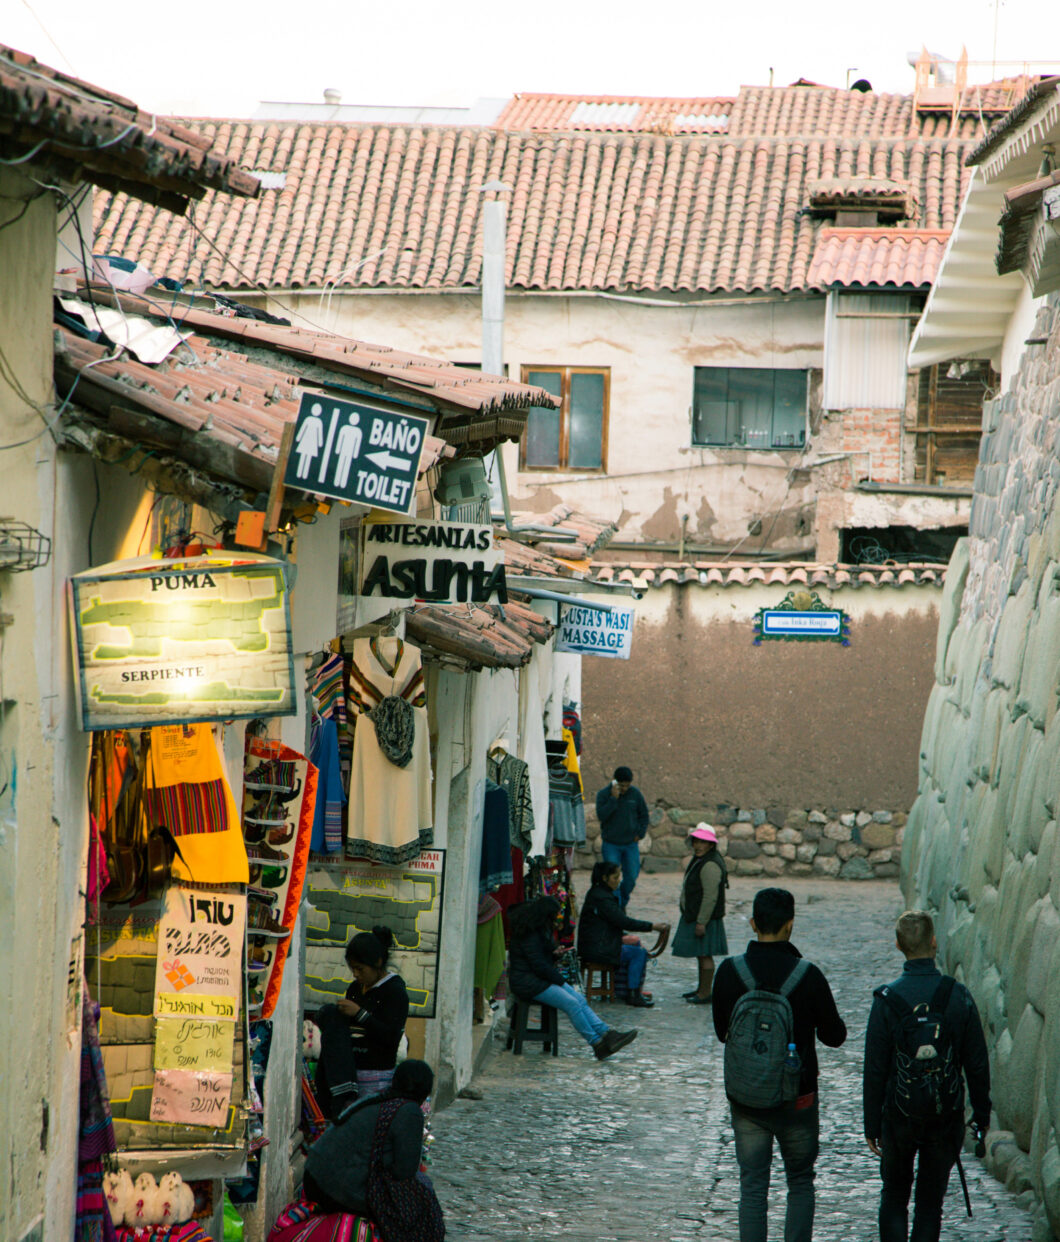 "Artesanías Asunta" clothing/souvenir shop in Cusco, Peru.